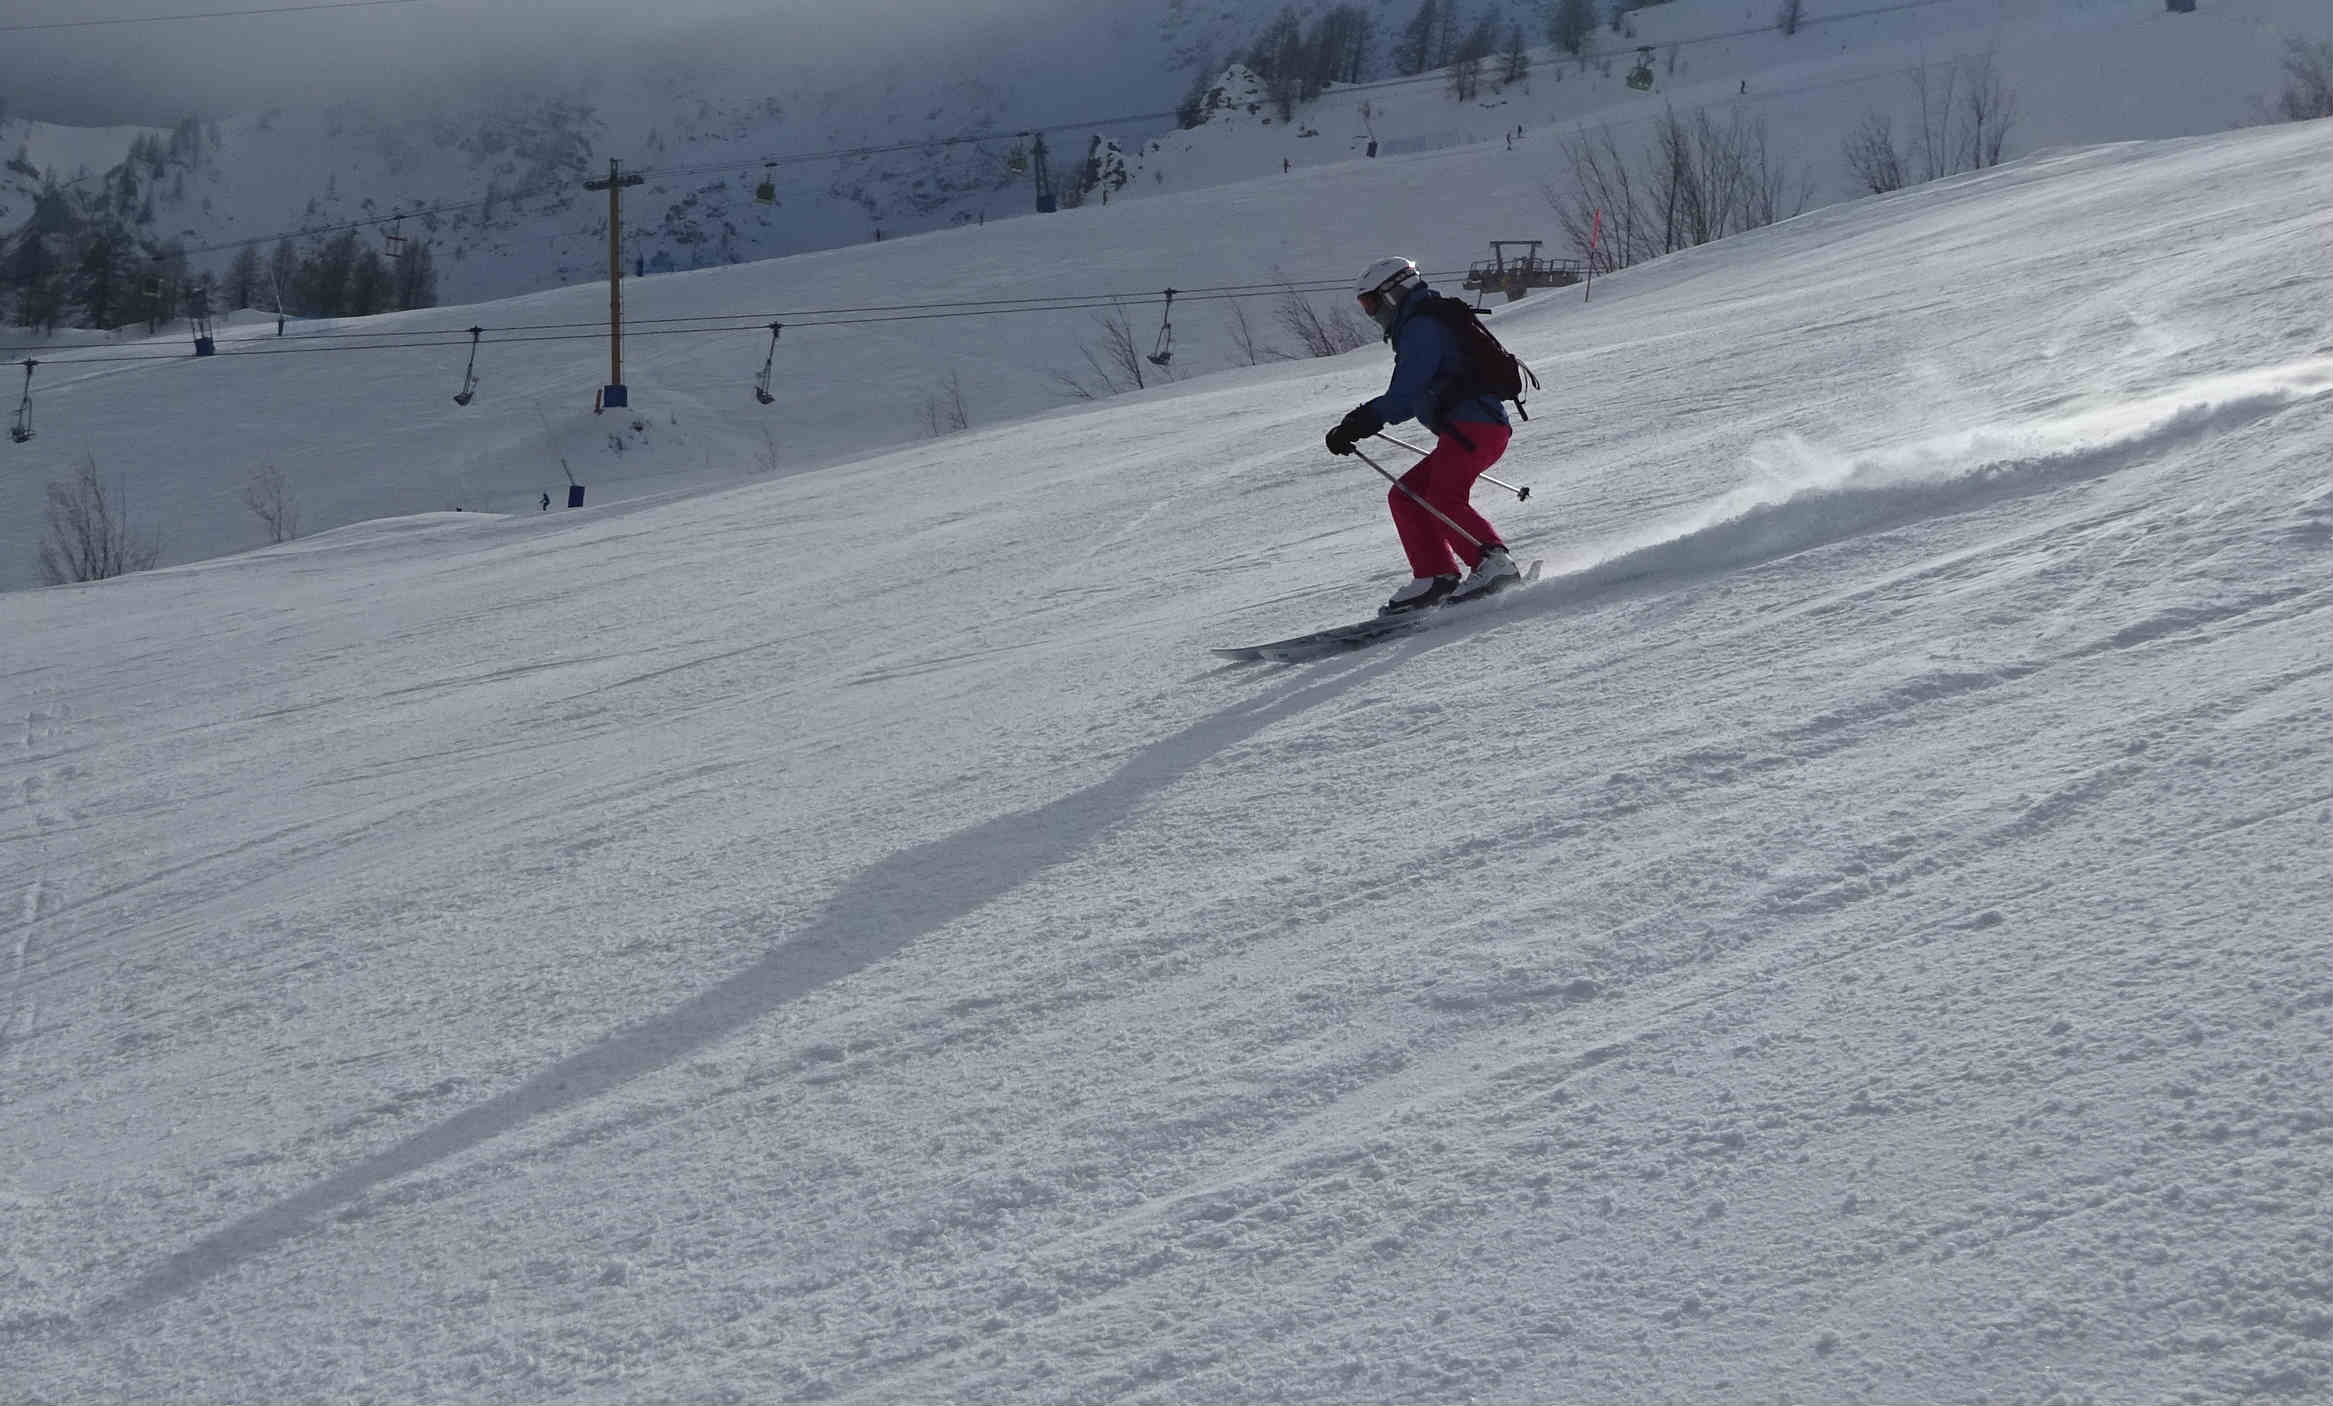 Our first ski day of the winter season | Ski Breezy